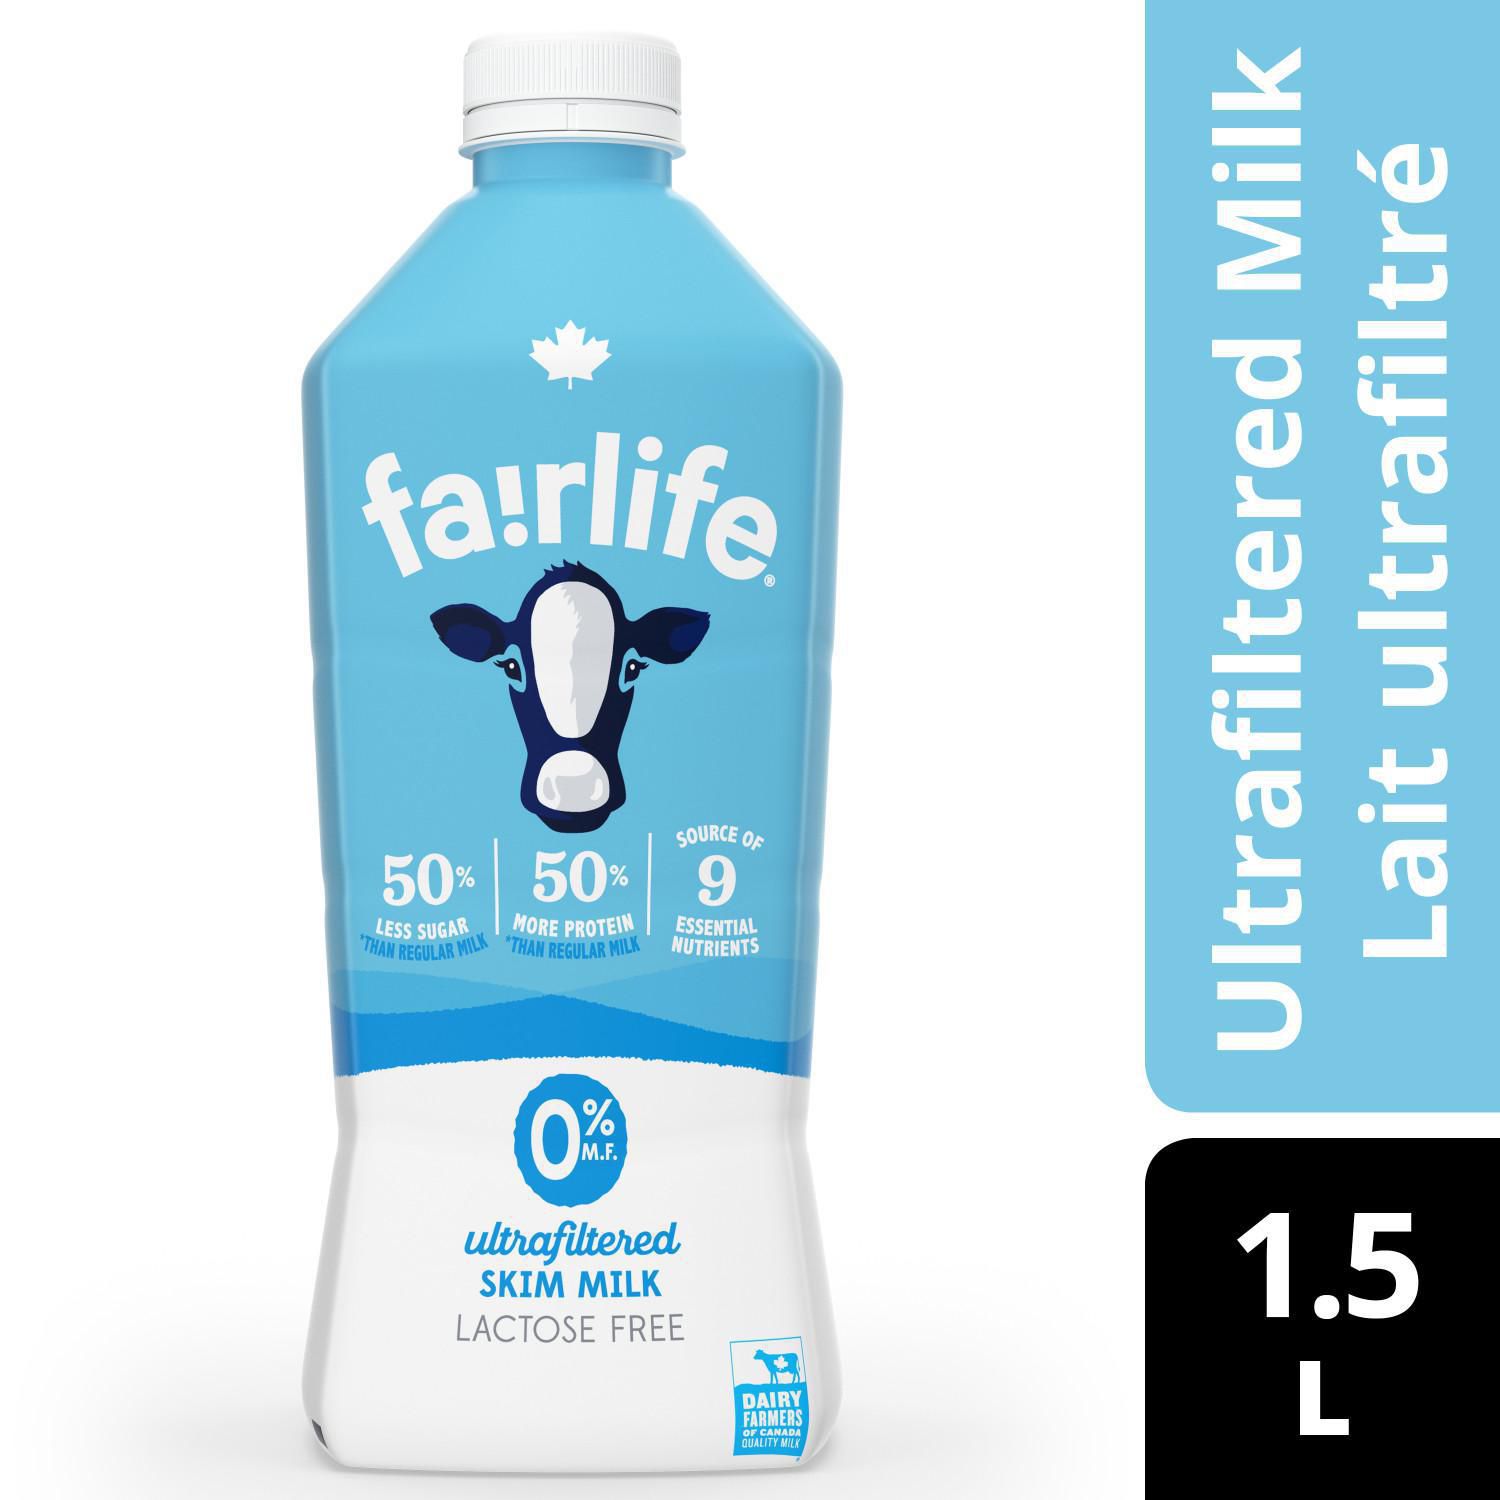 fairlife skim milk nutrition label